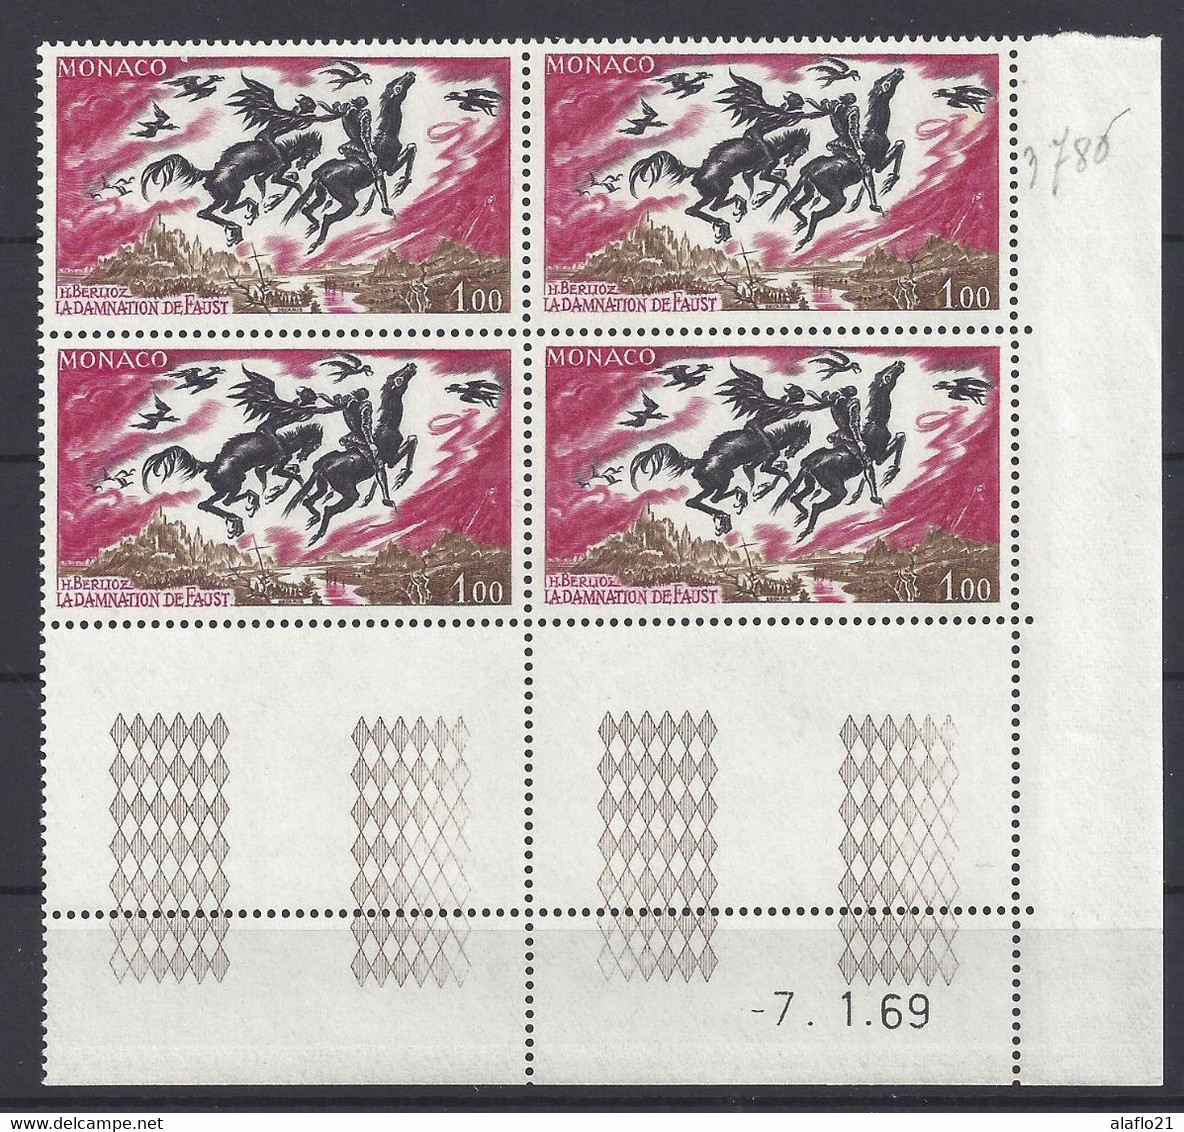 MONACO N° 786 - Bloc De 4 COIN DATE - NEUF** - BERLIOZ - DAMNATION DE FAUST - 7/1/69 - Unused Stamps